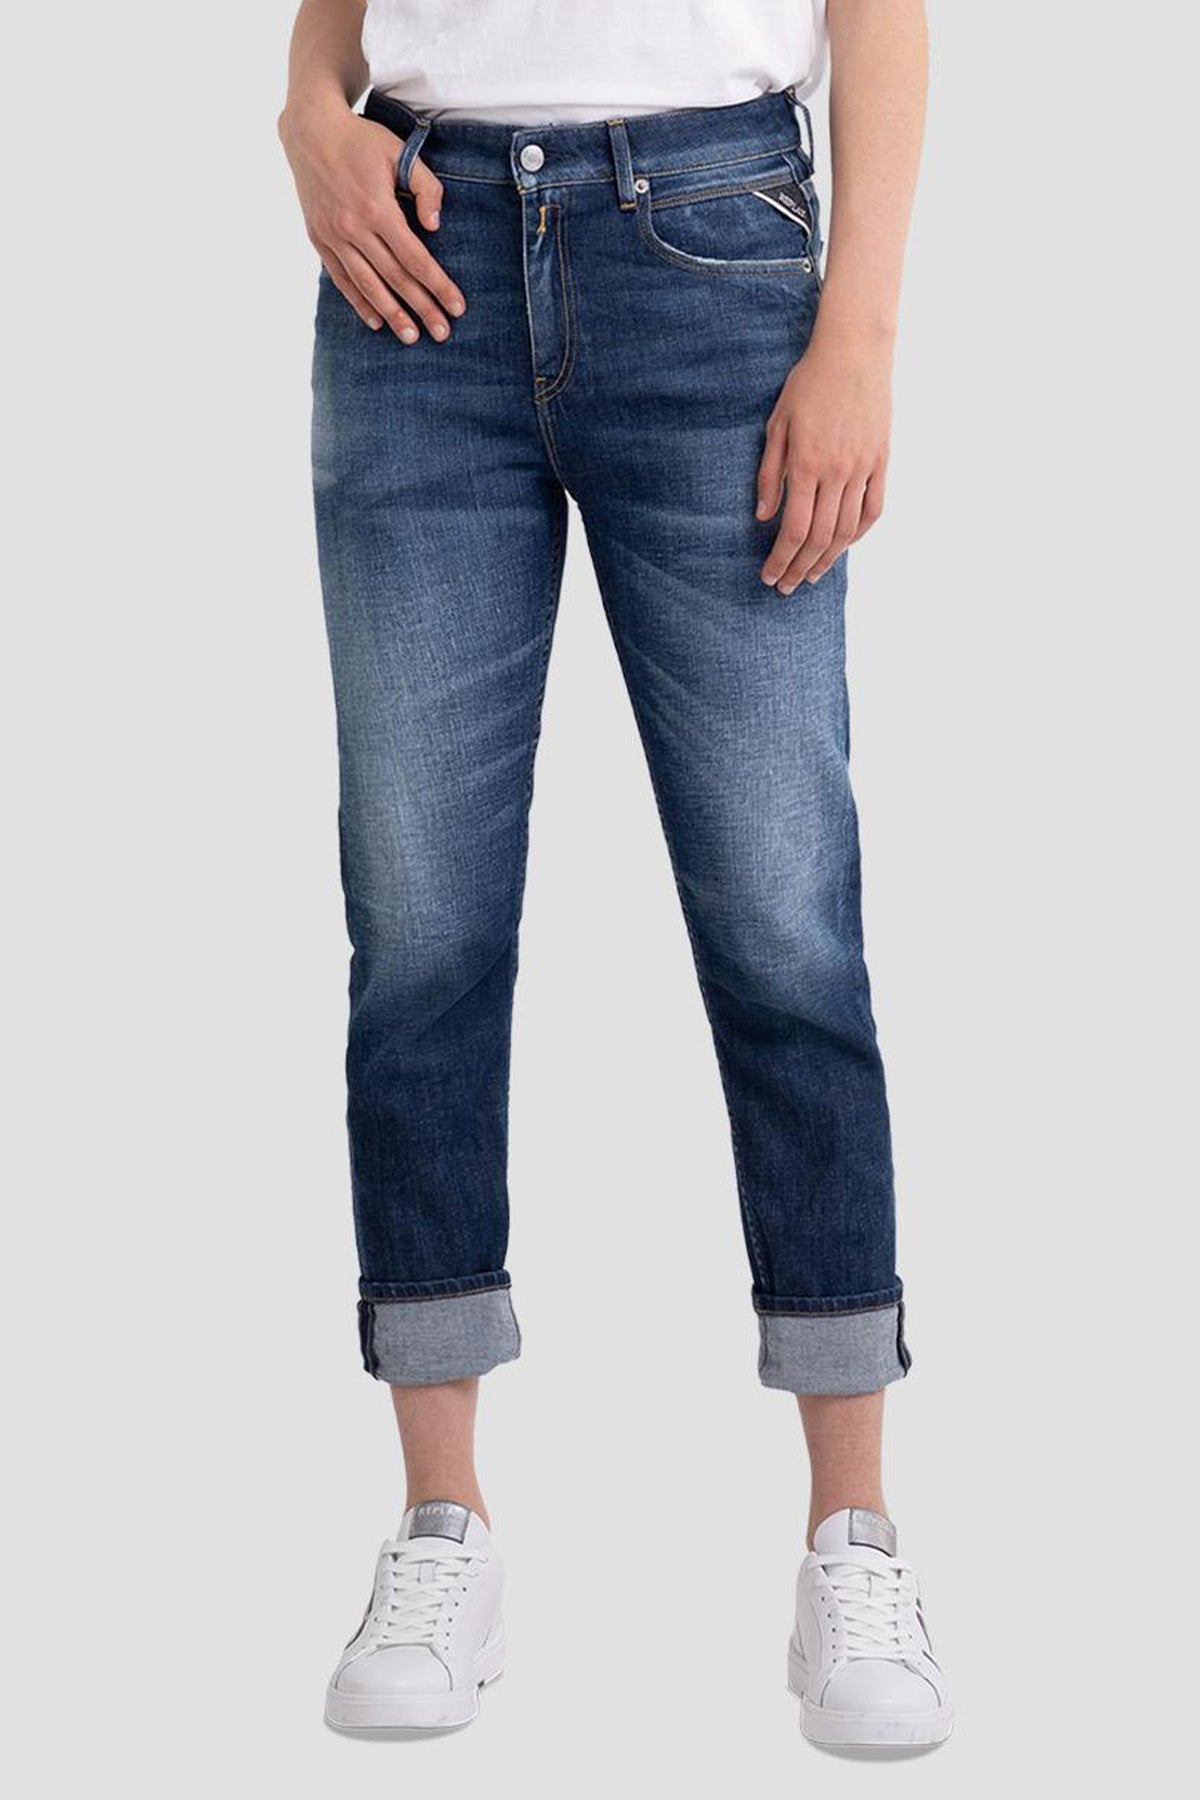 Replay Marty Slim Boyfriend Fit Jeans-Libas Trendy Fashion Store